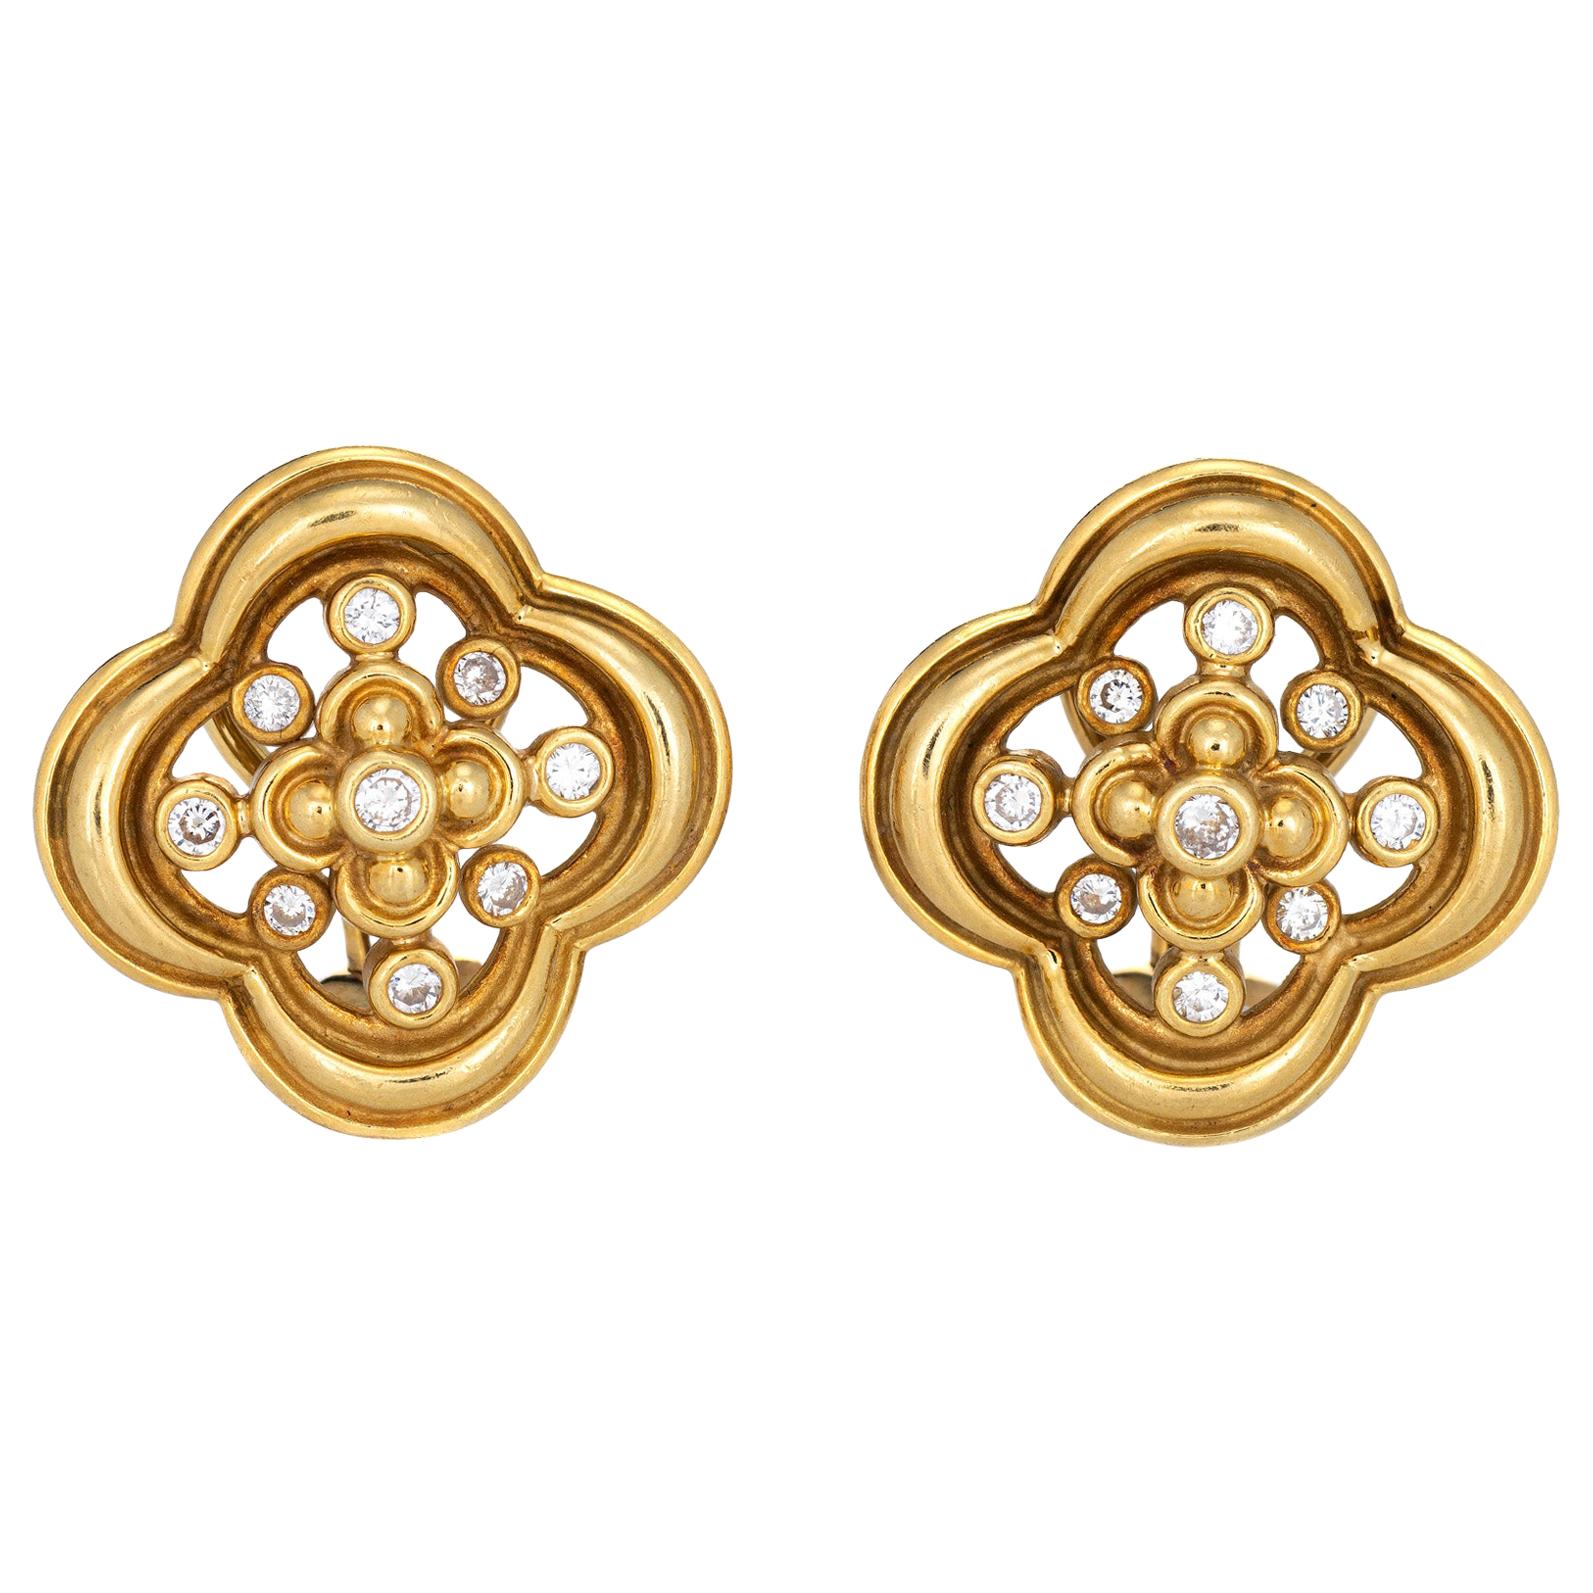 Jose Hess Diamond Earrings Vintage 18k Yellow Gold Quatrefoil Design Jewelry